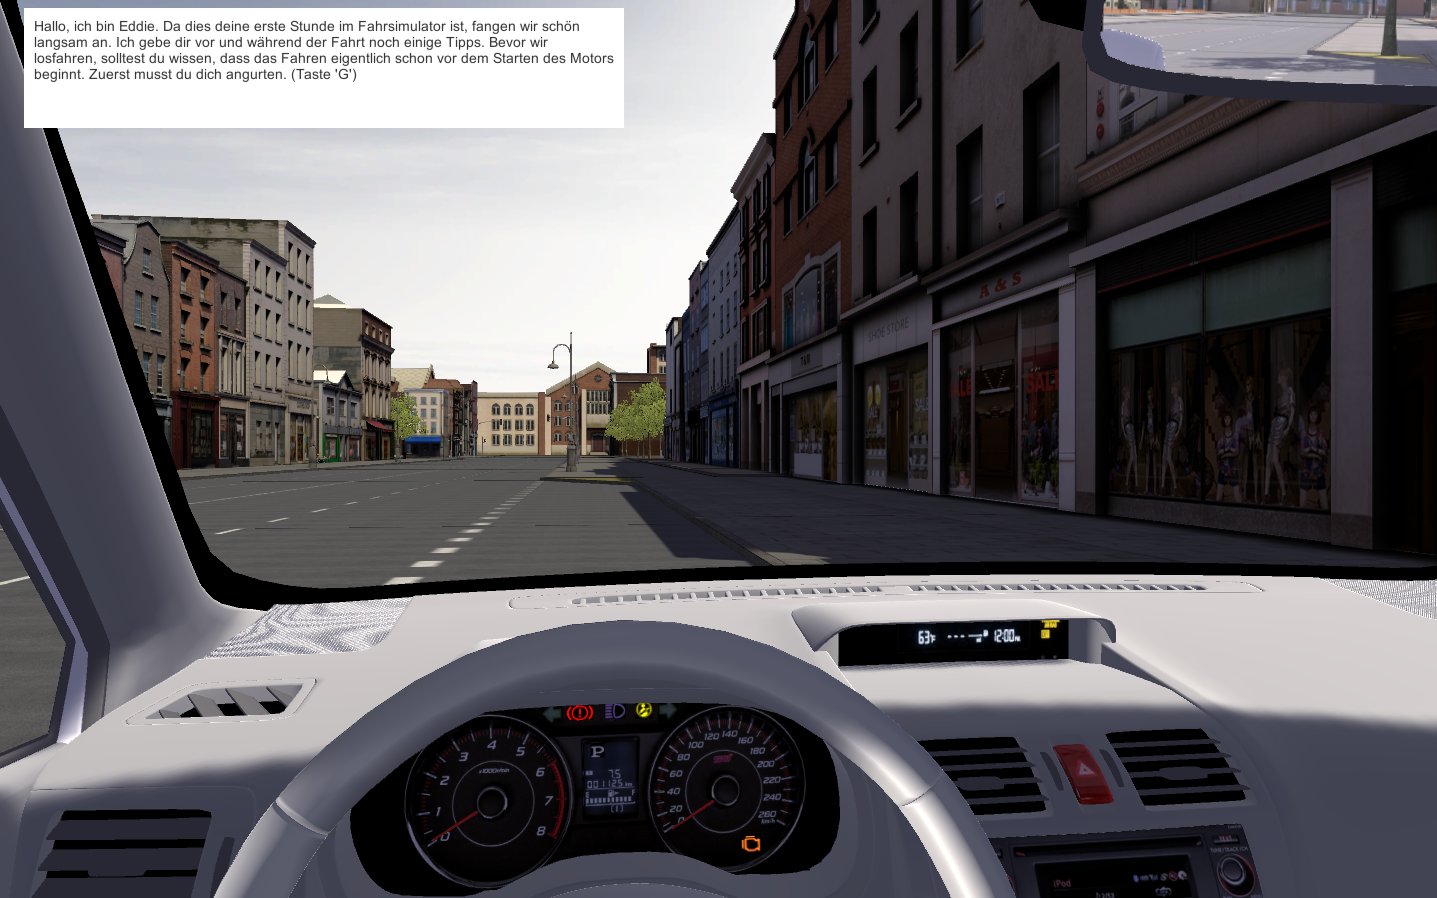 online driving simulator 3d free